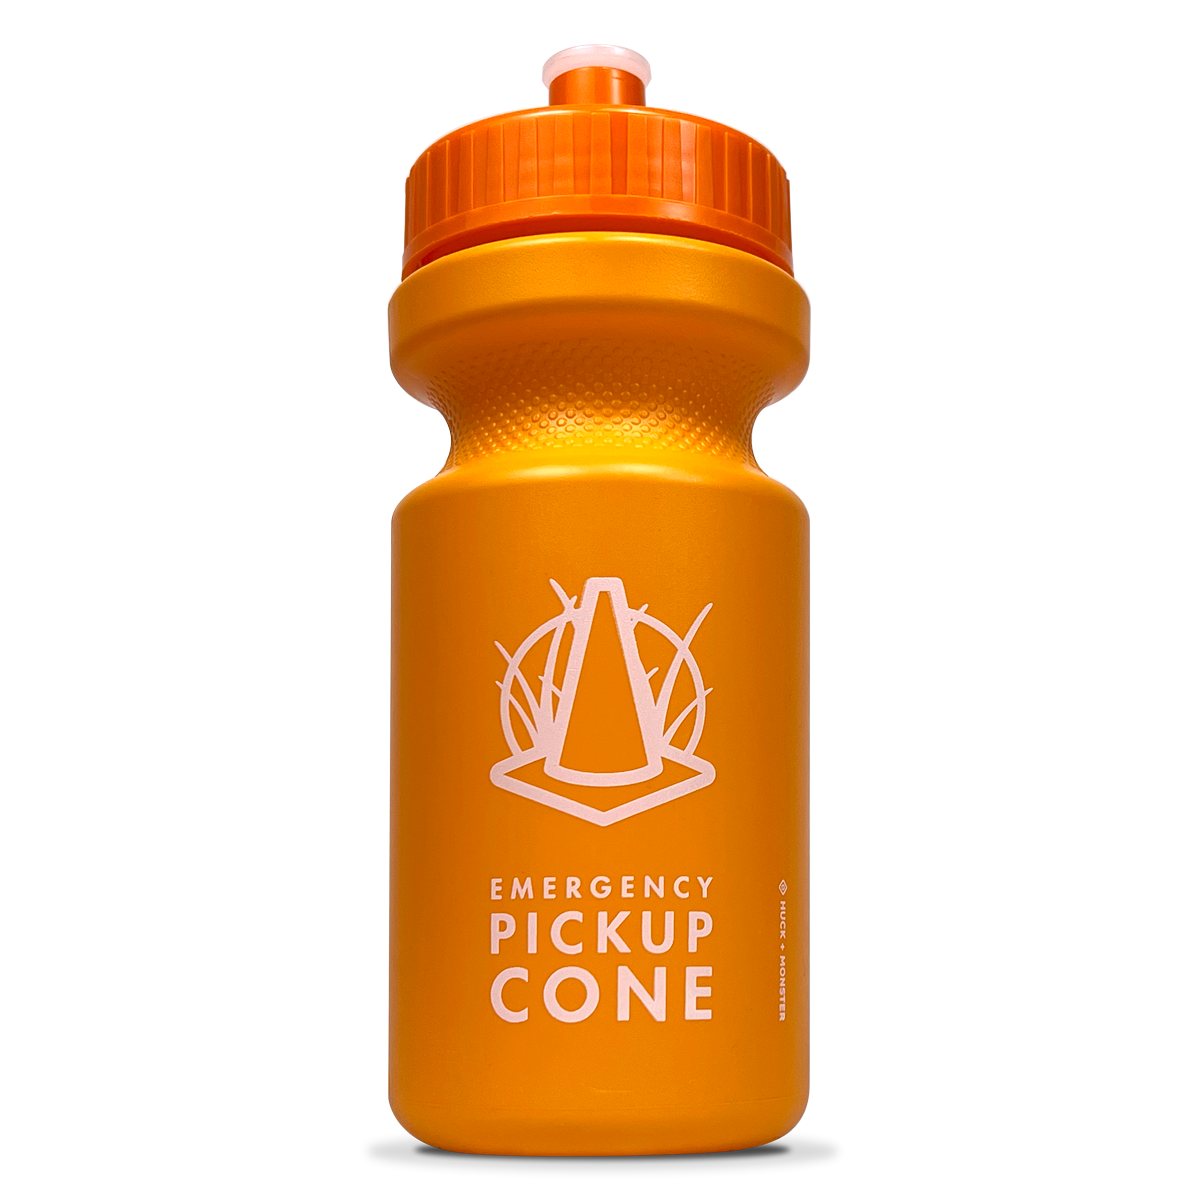 Emergency Pickup Cone Bottle (22oz)